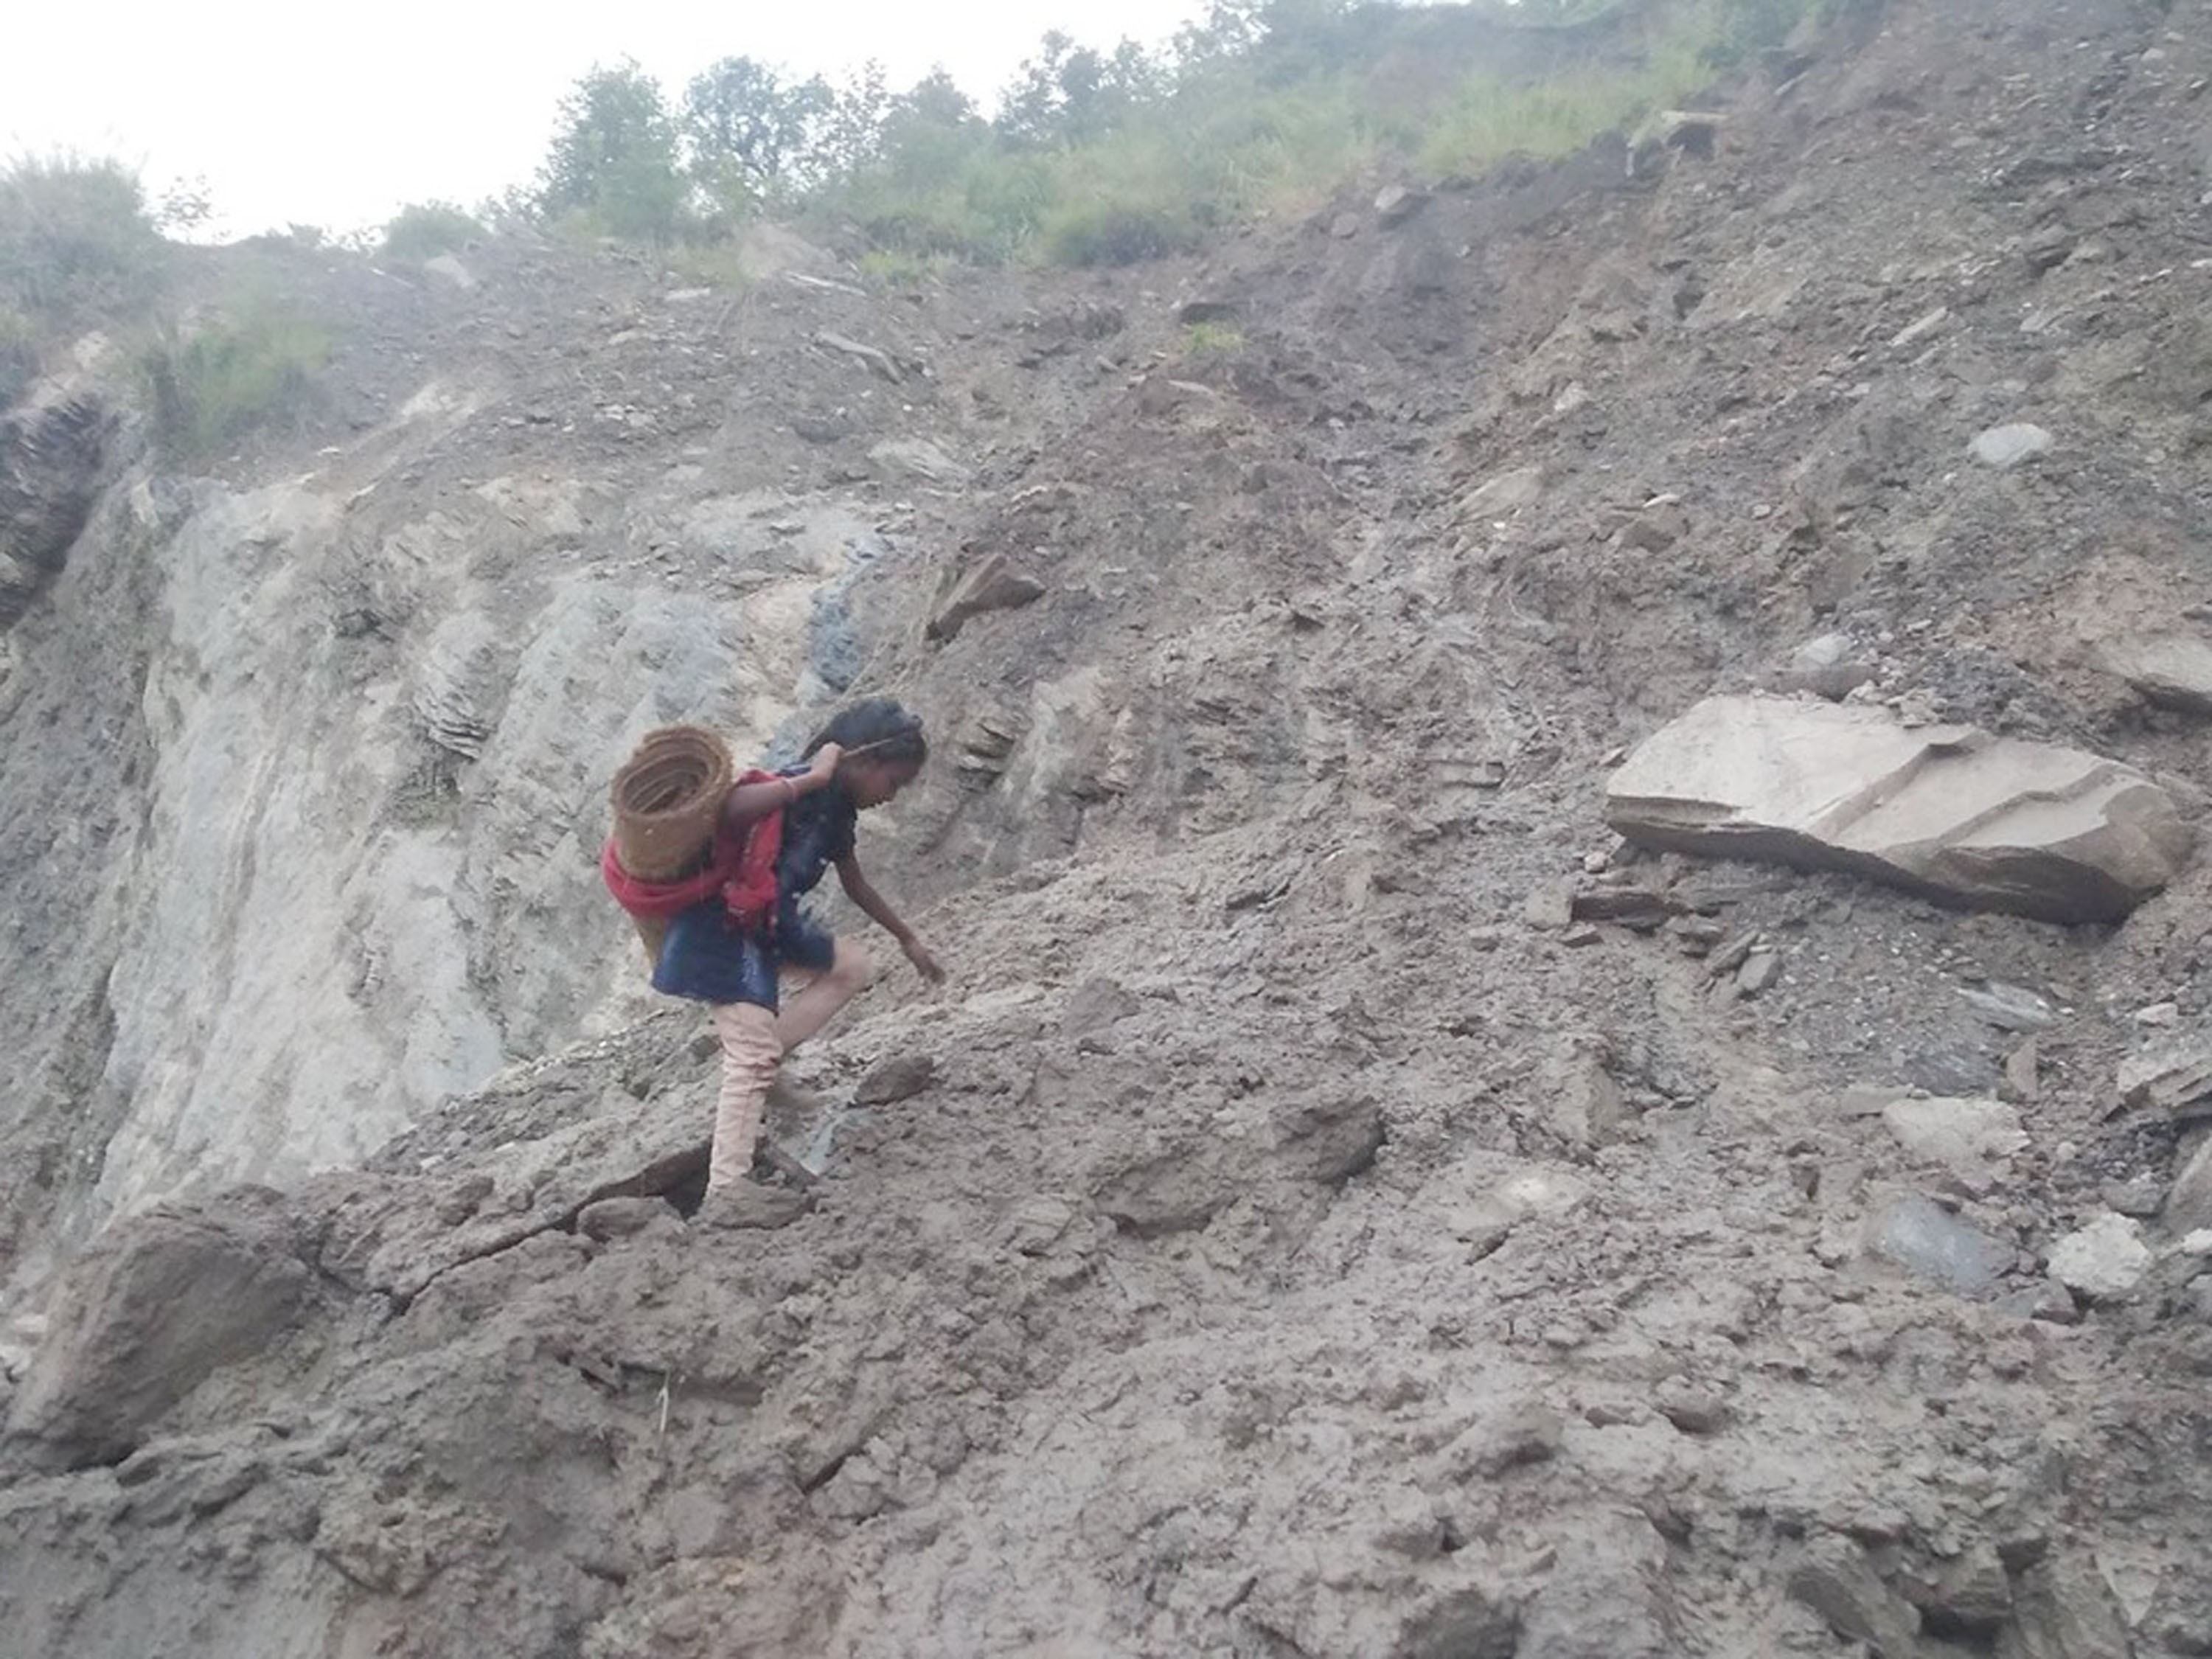 paving-the-way-through-the-mudslide